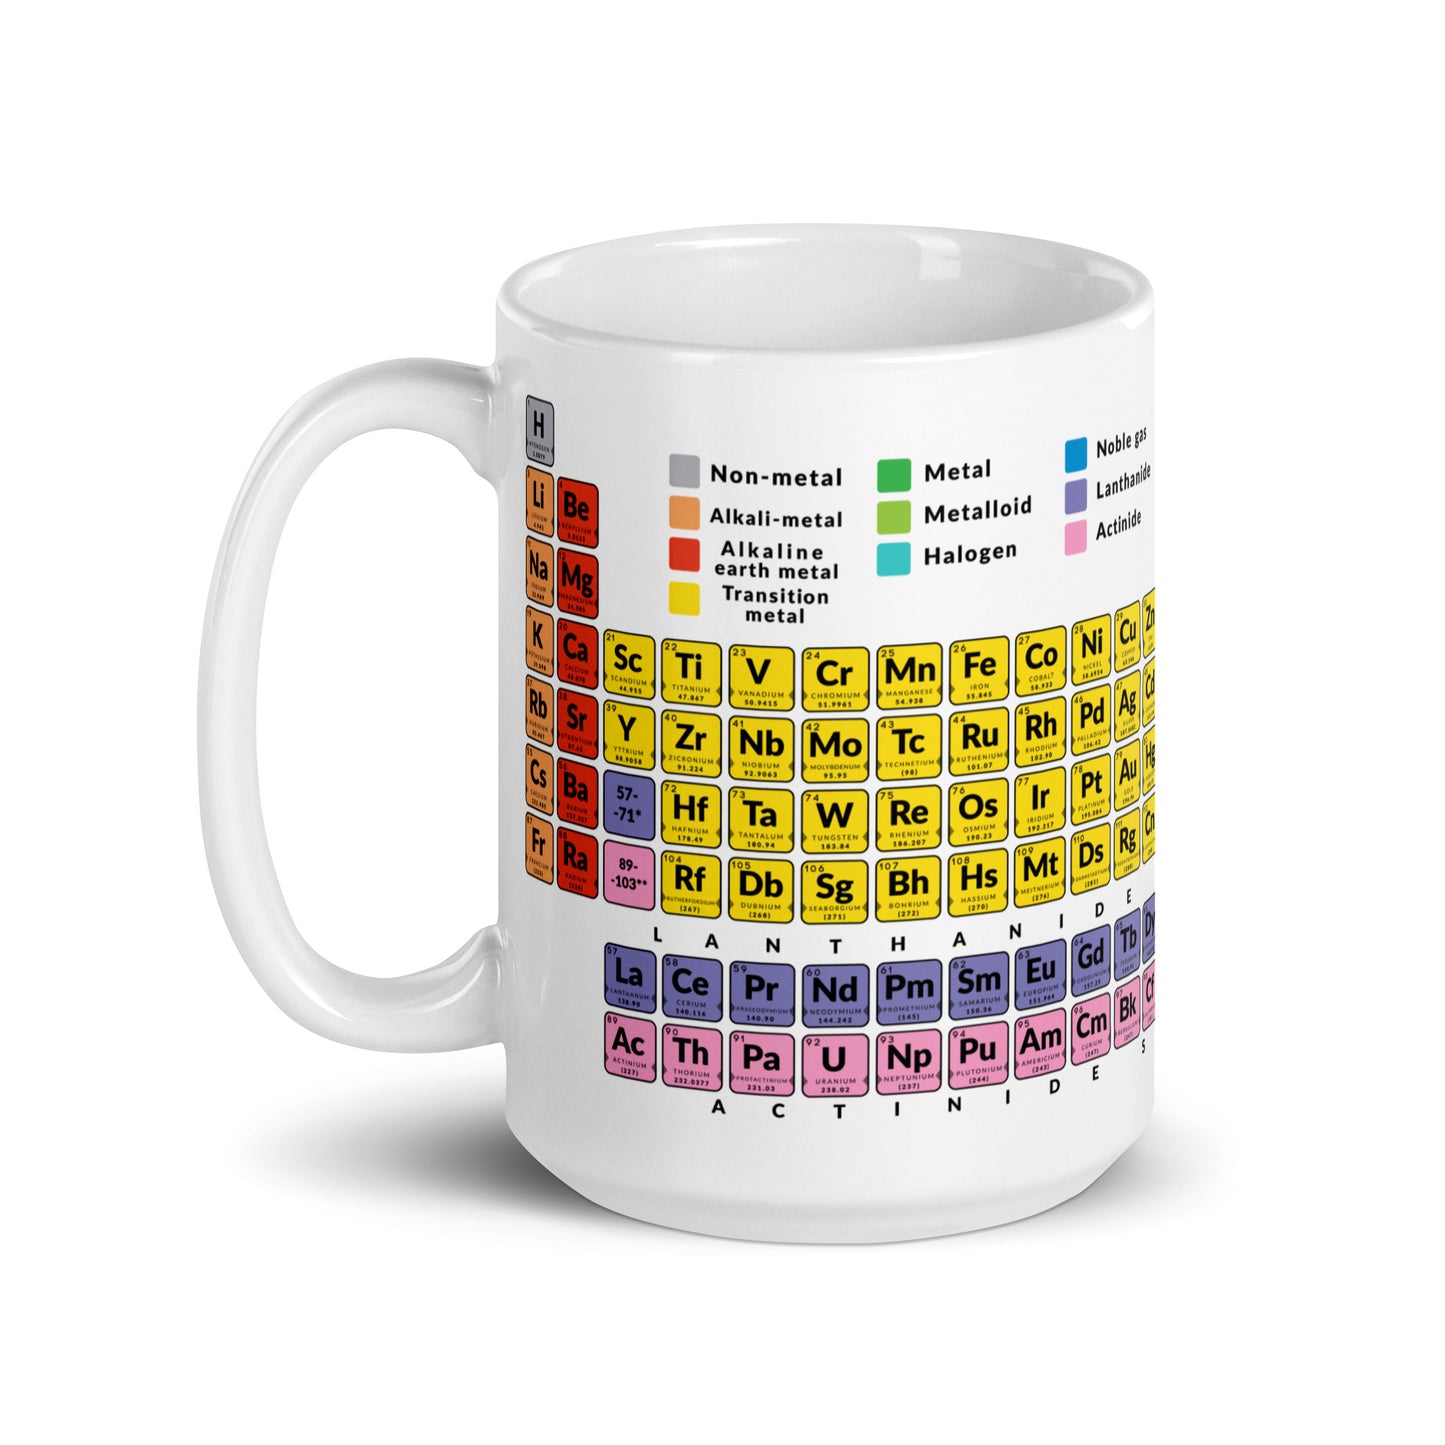 Personalised mug 15 oz with Chemistry Periodic Table Mendeleev 